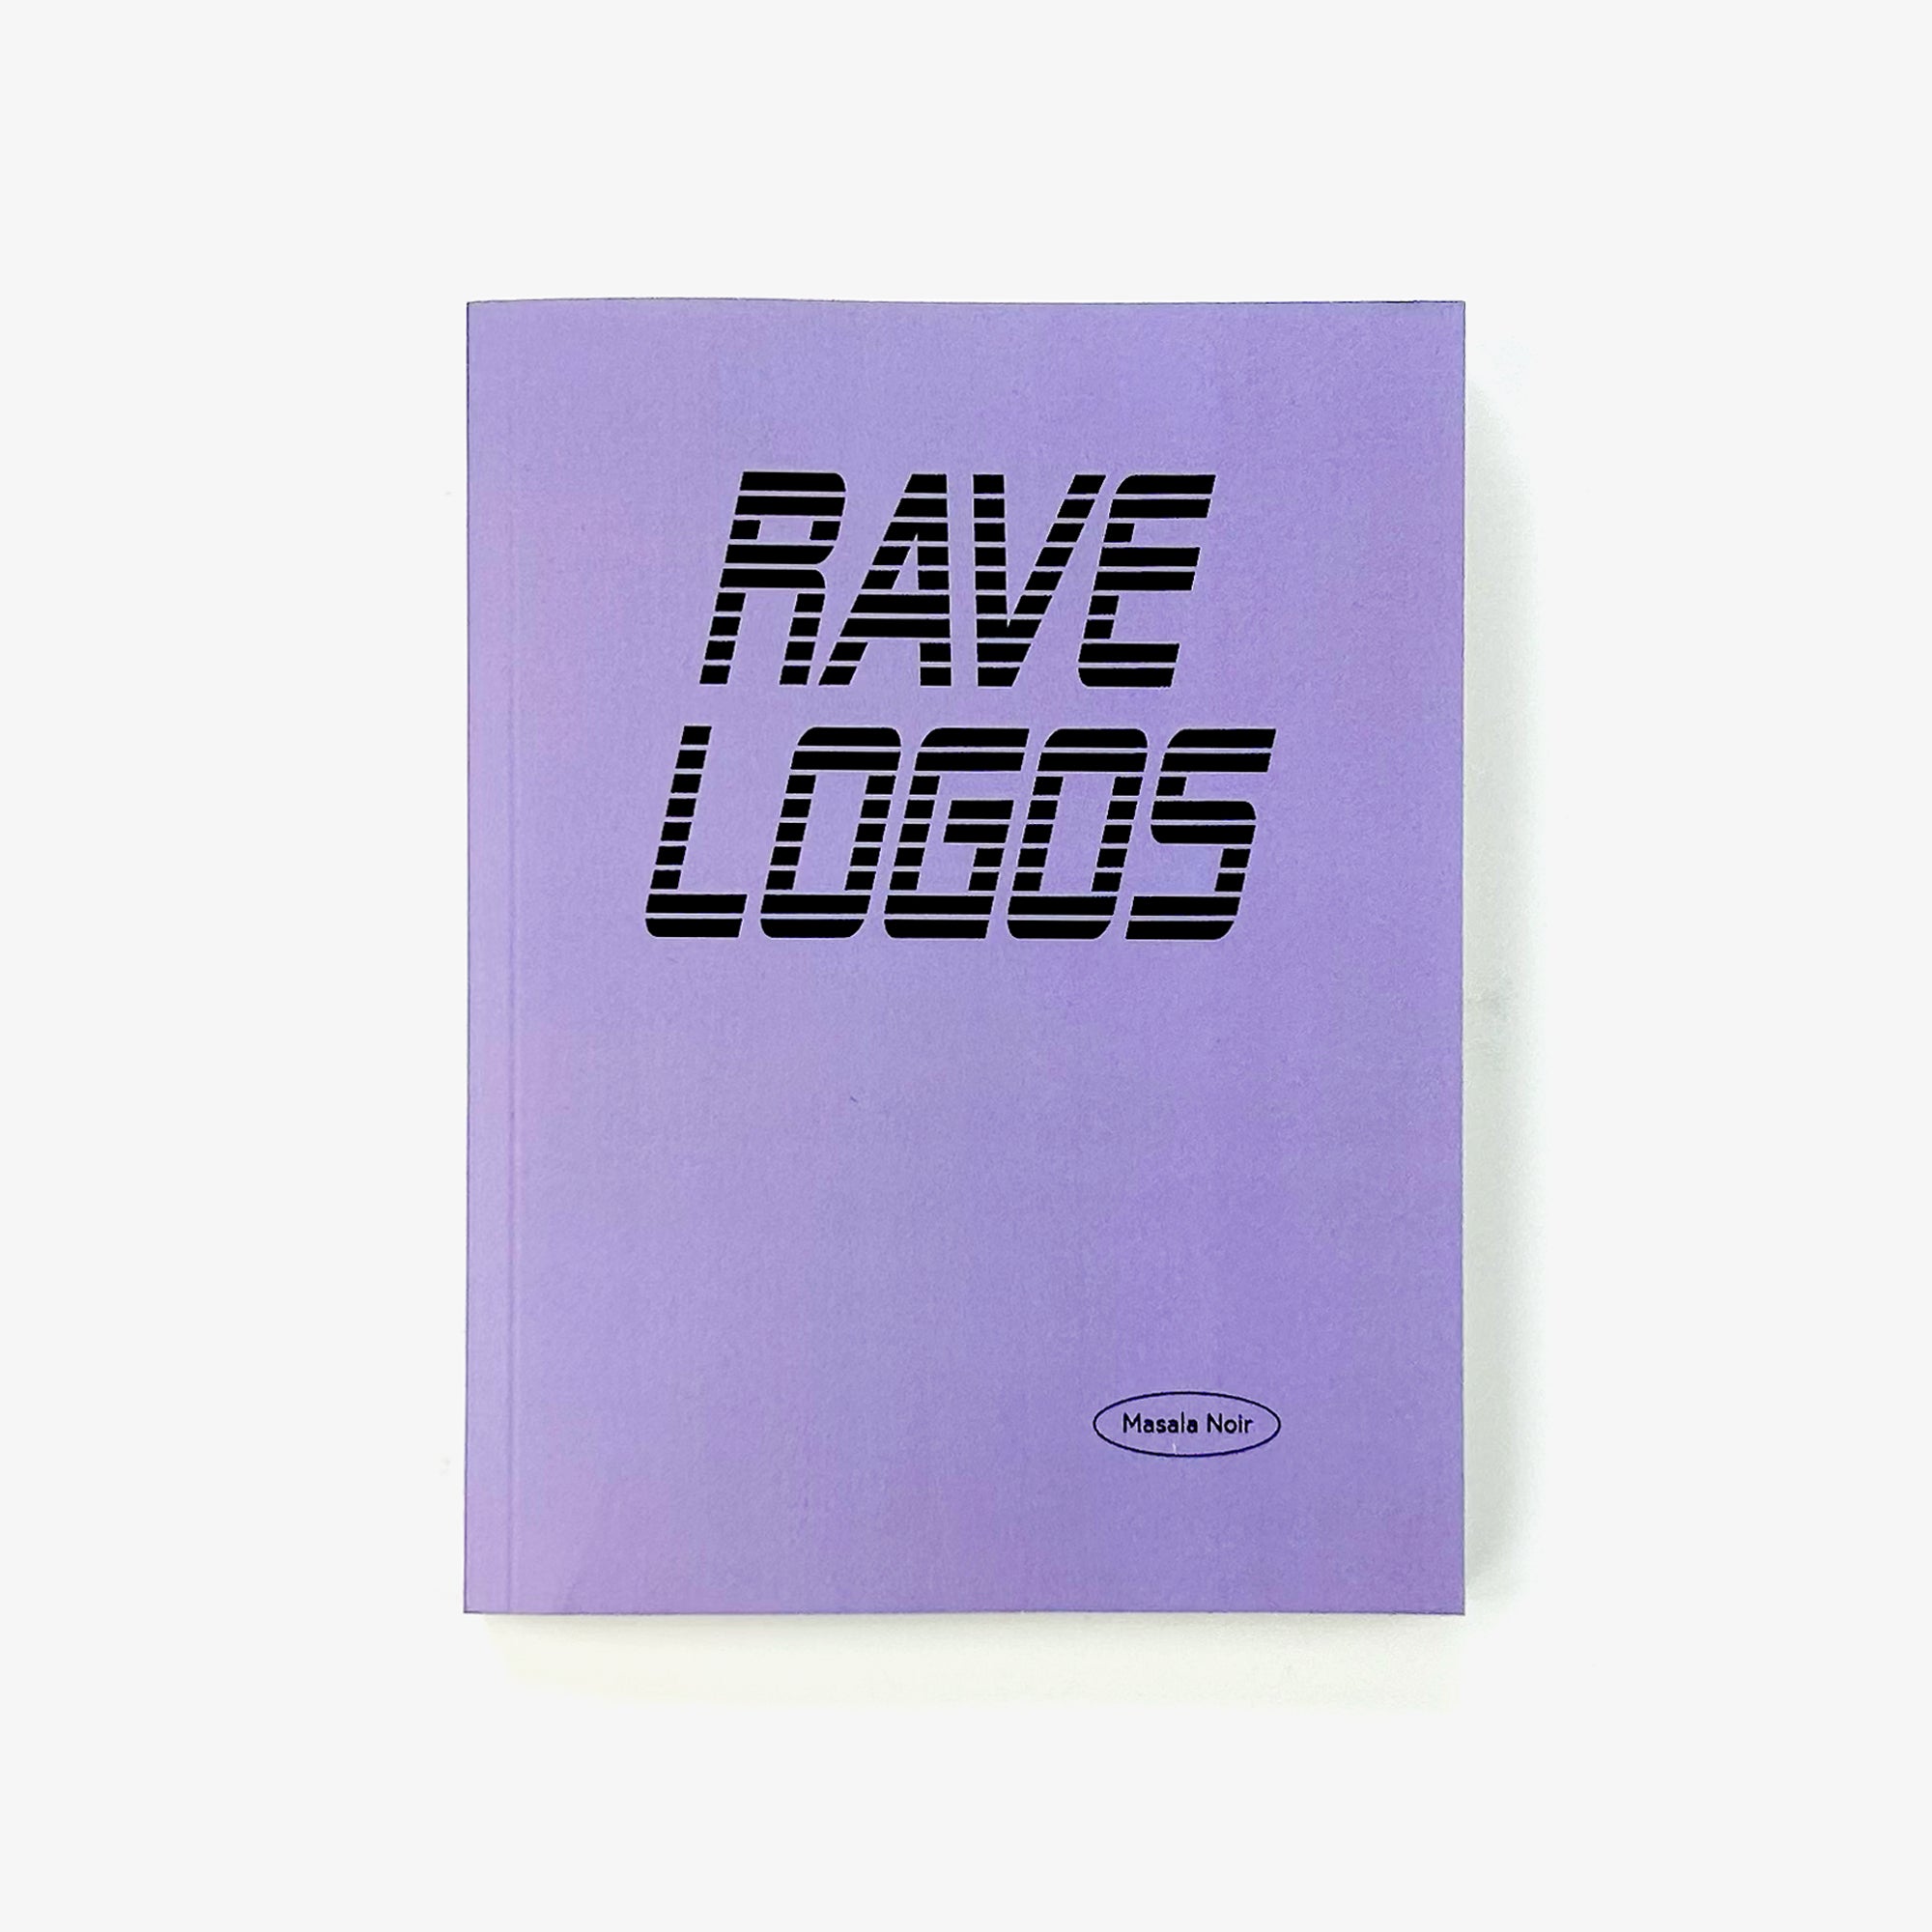 Rave Logos - Pre-Order